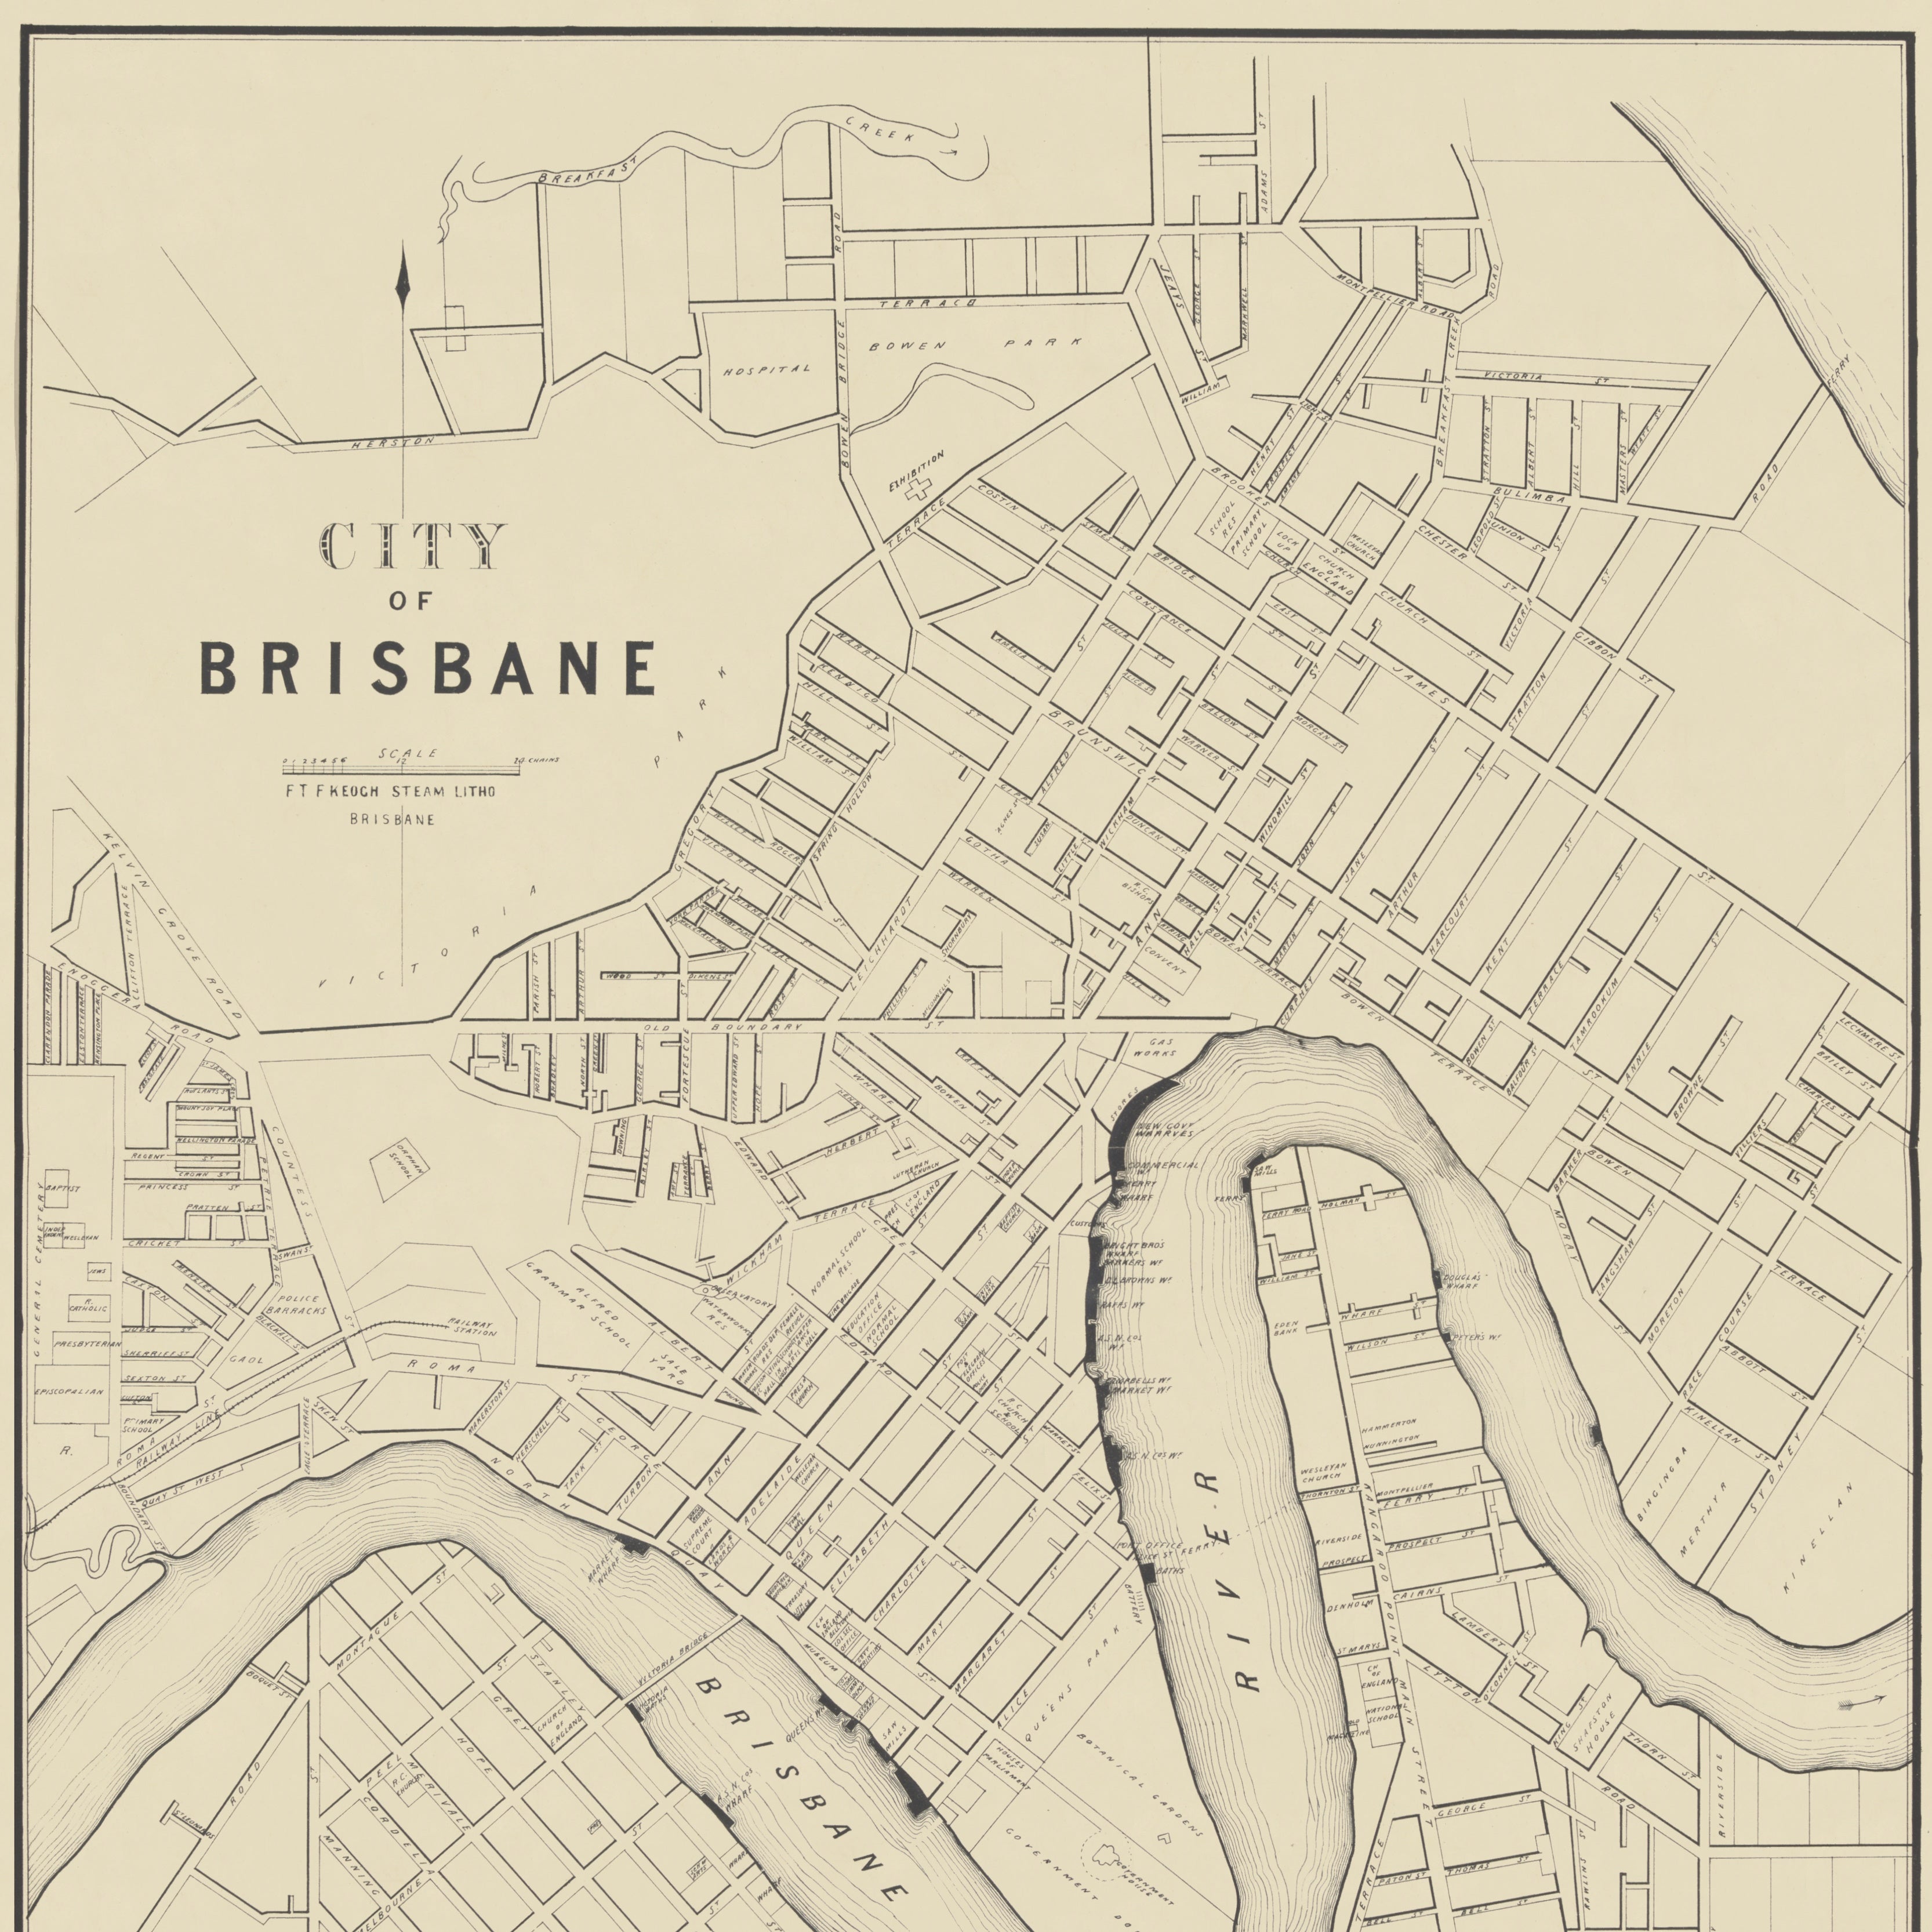 1878 Brisbane - City of Brisbane